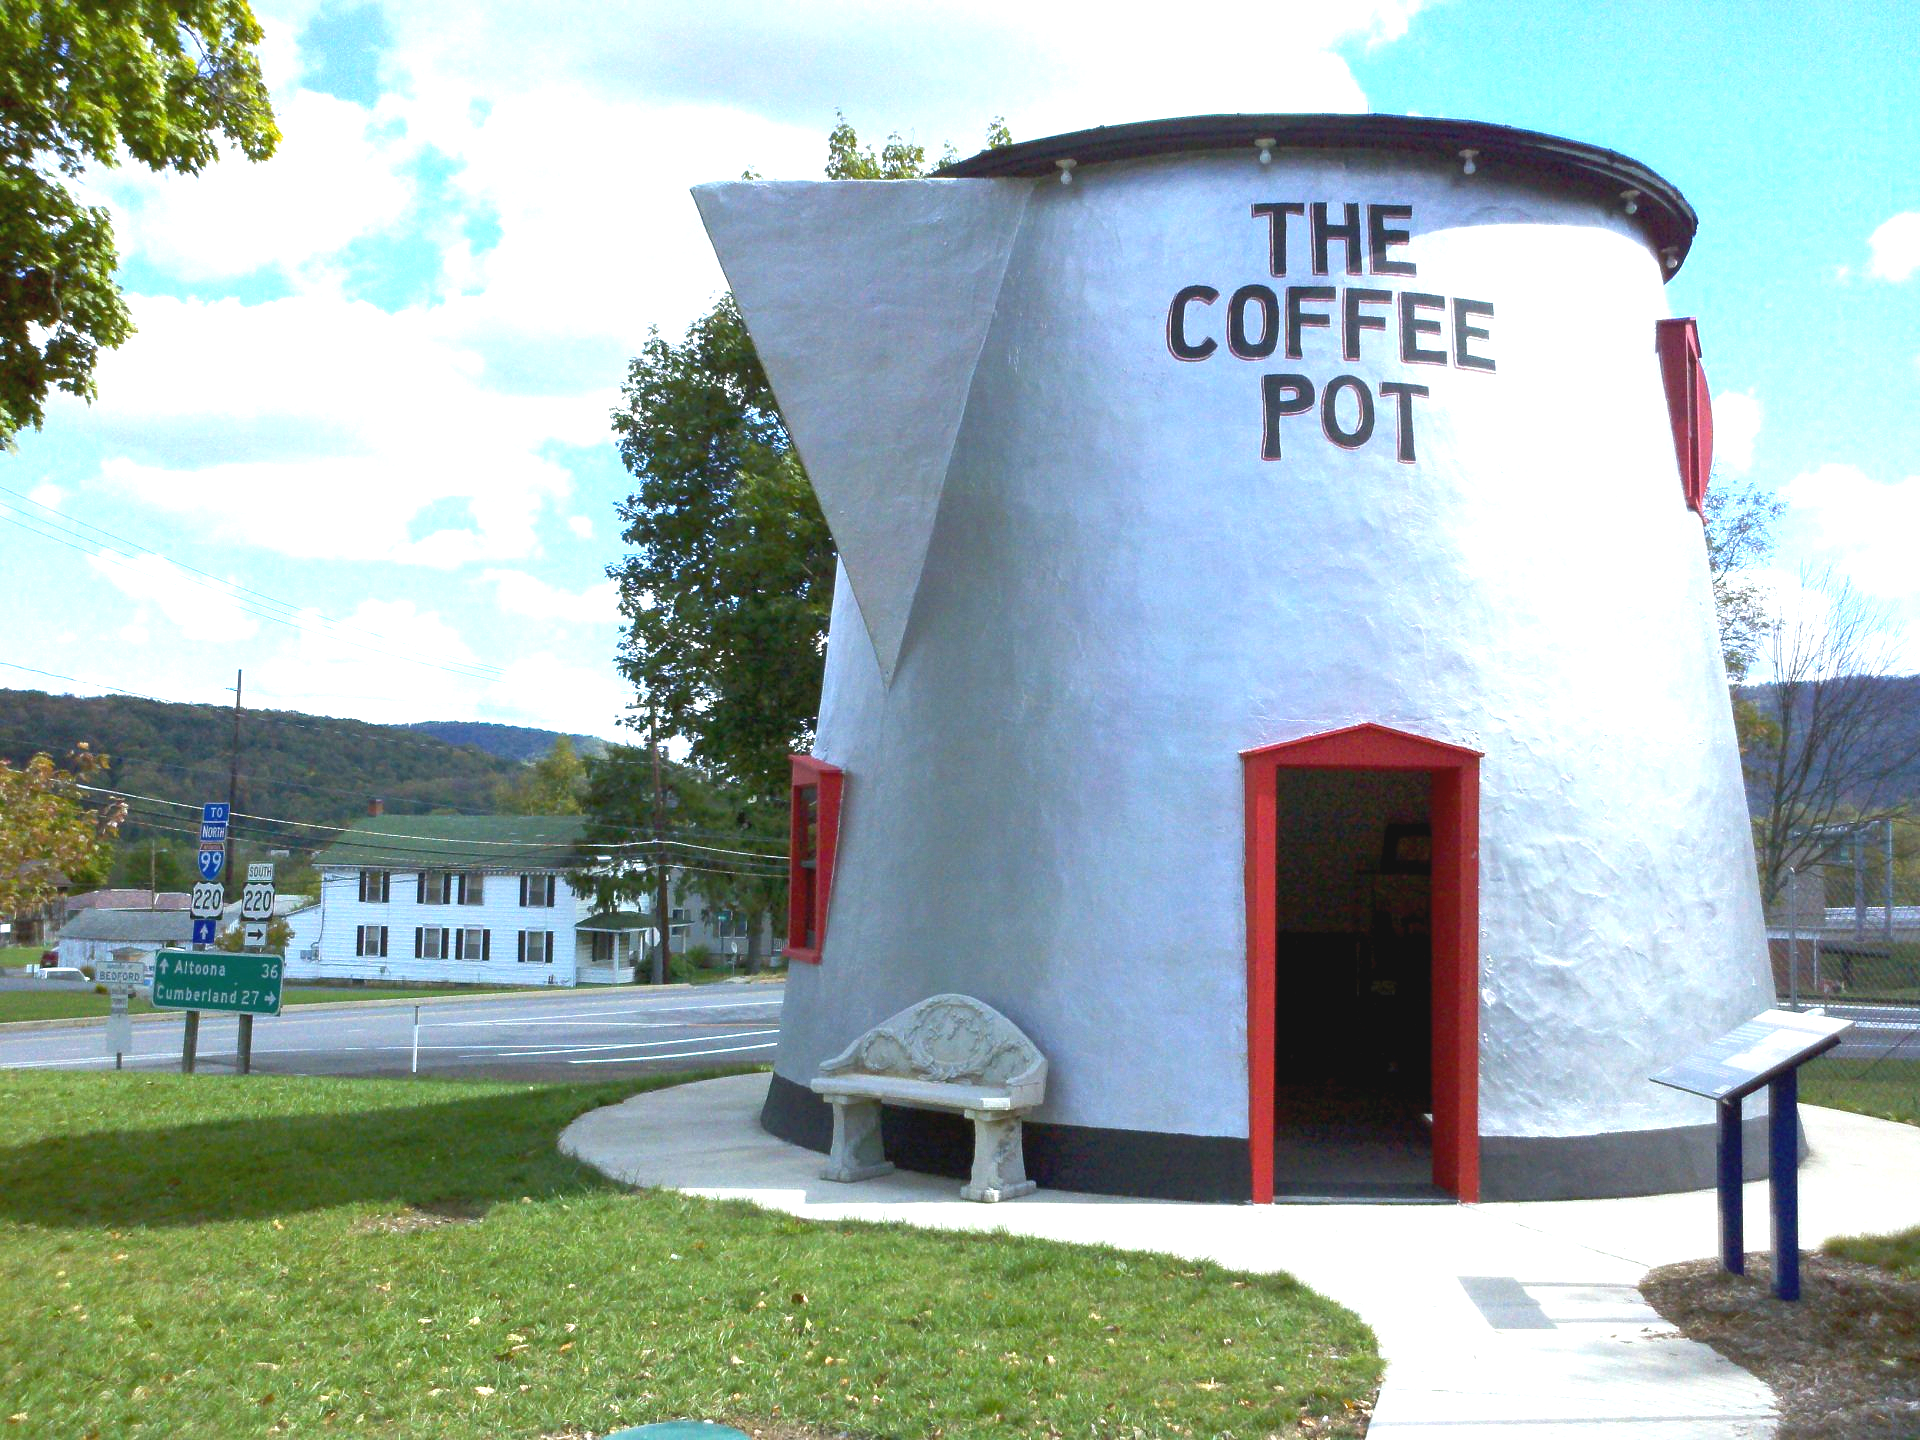 
World's Largest Coffee Pot: The Koontz Coffee Pot sets world record